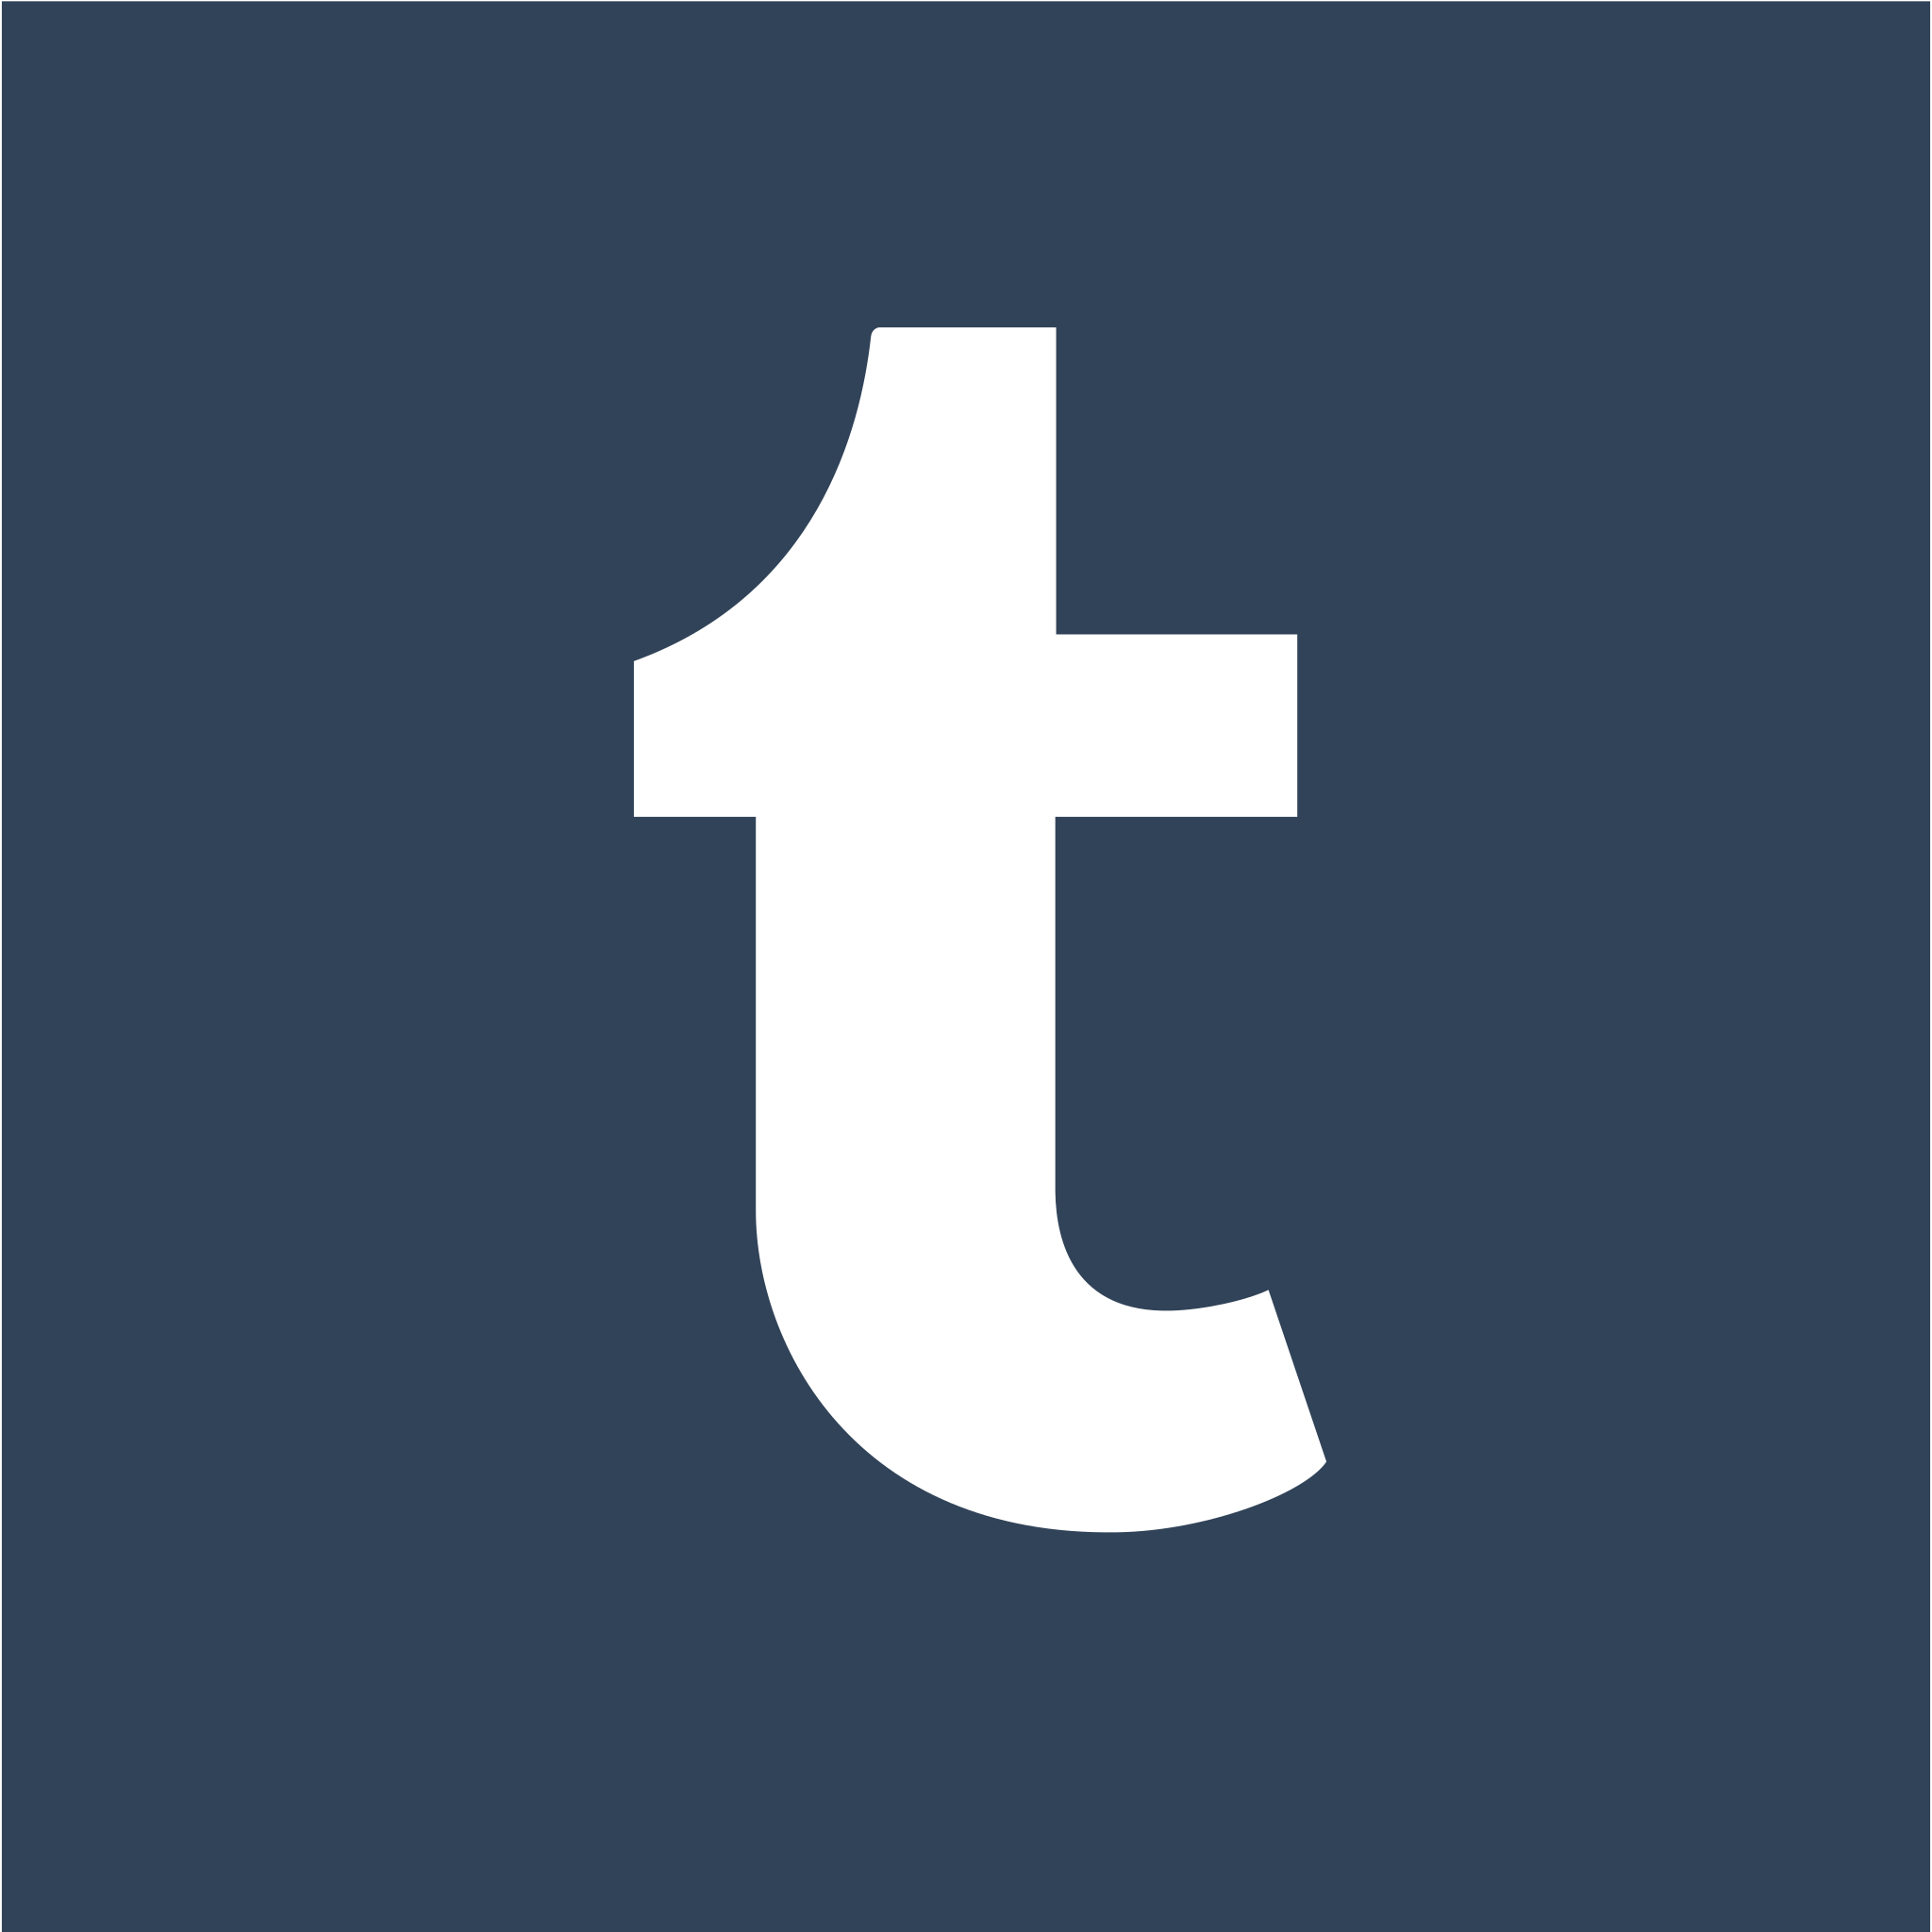 Tumblr – o mais novo aplicativo do momento